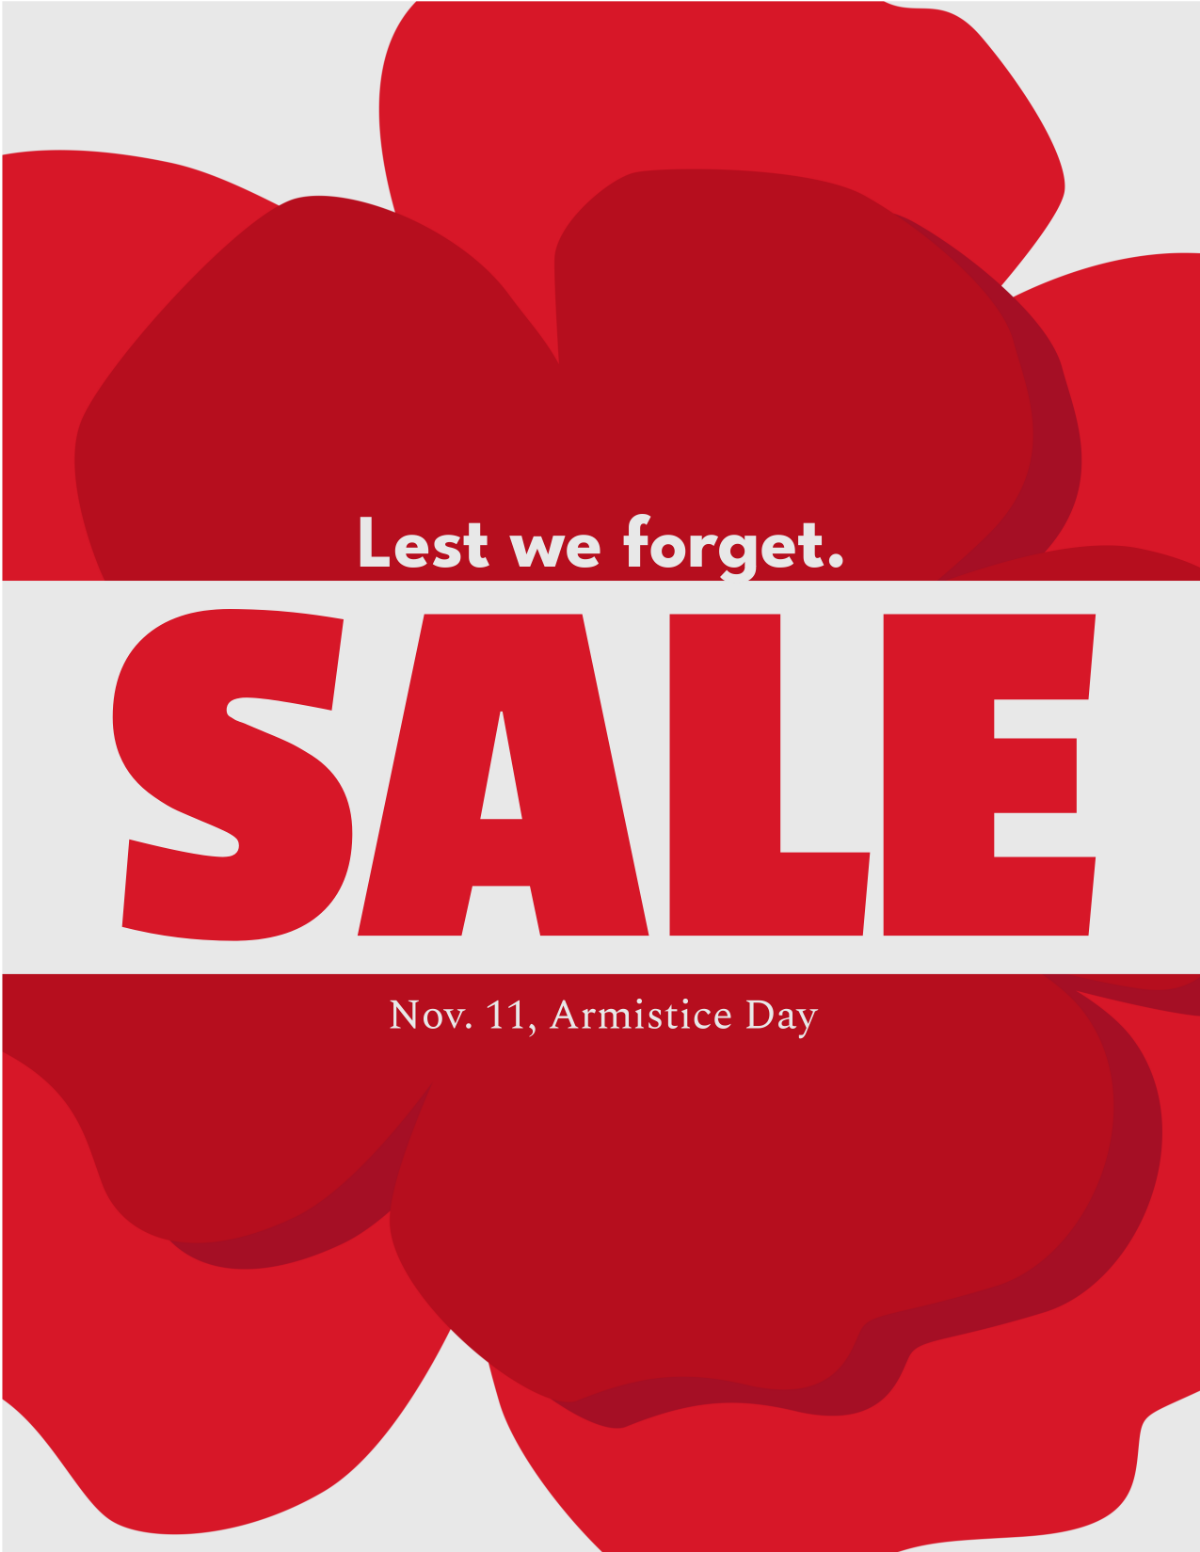 Armistice Day Sales Flyer Template